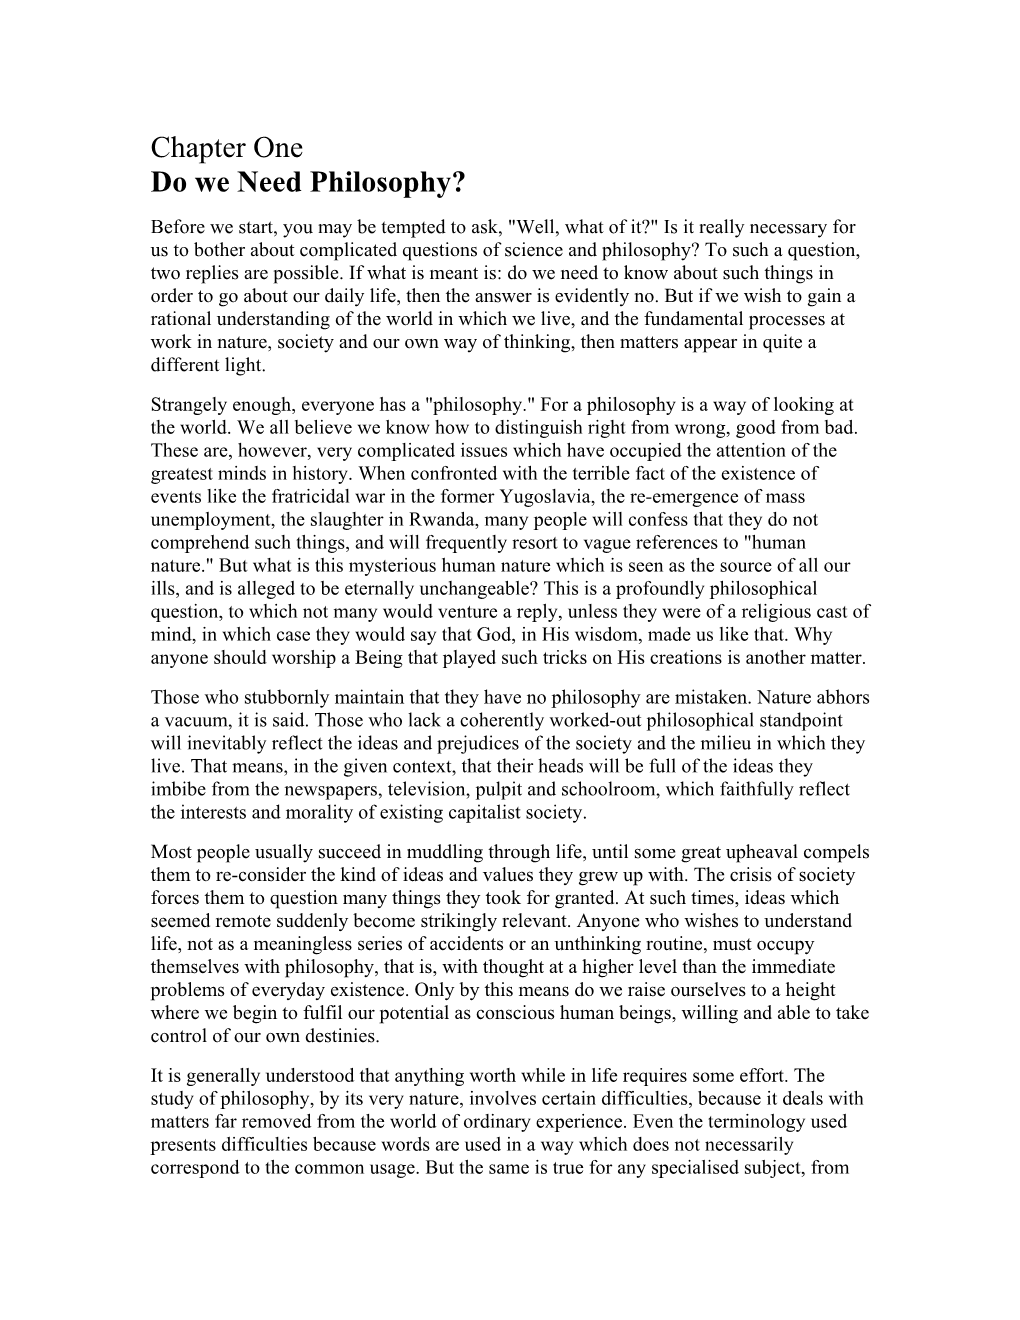 Chapter One Do We Need Philosophy?